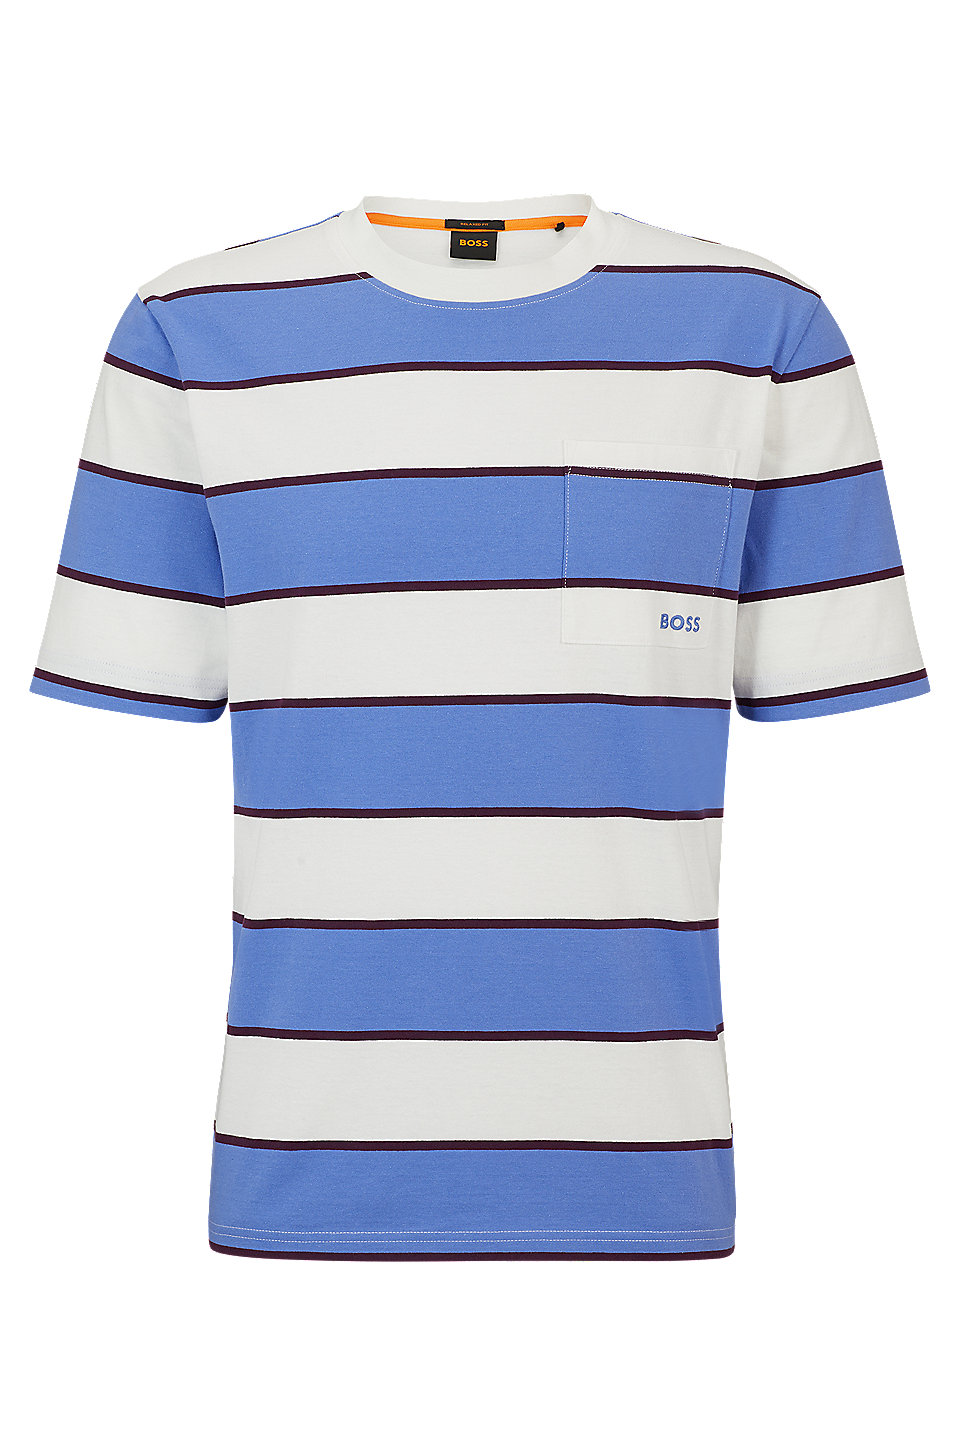 BOSS - Block-striped T-shirt in cotton jersey